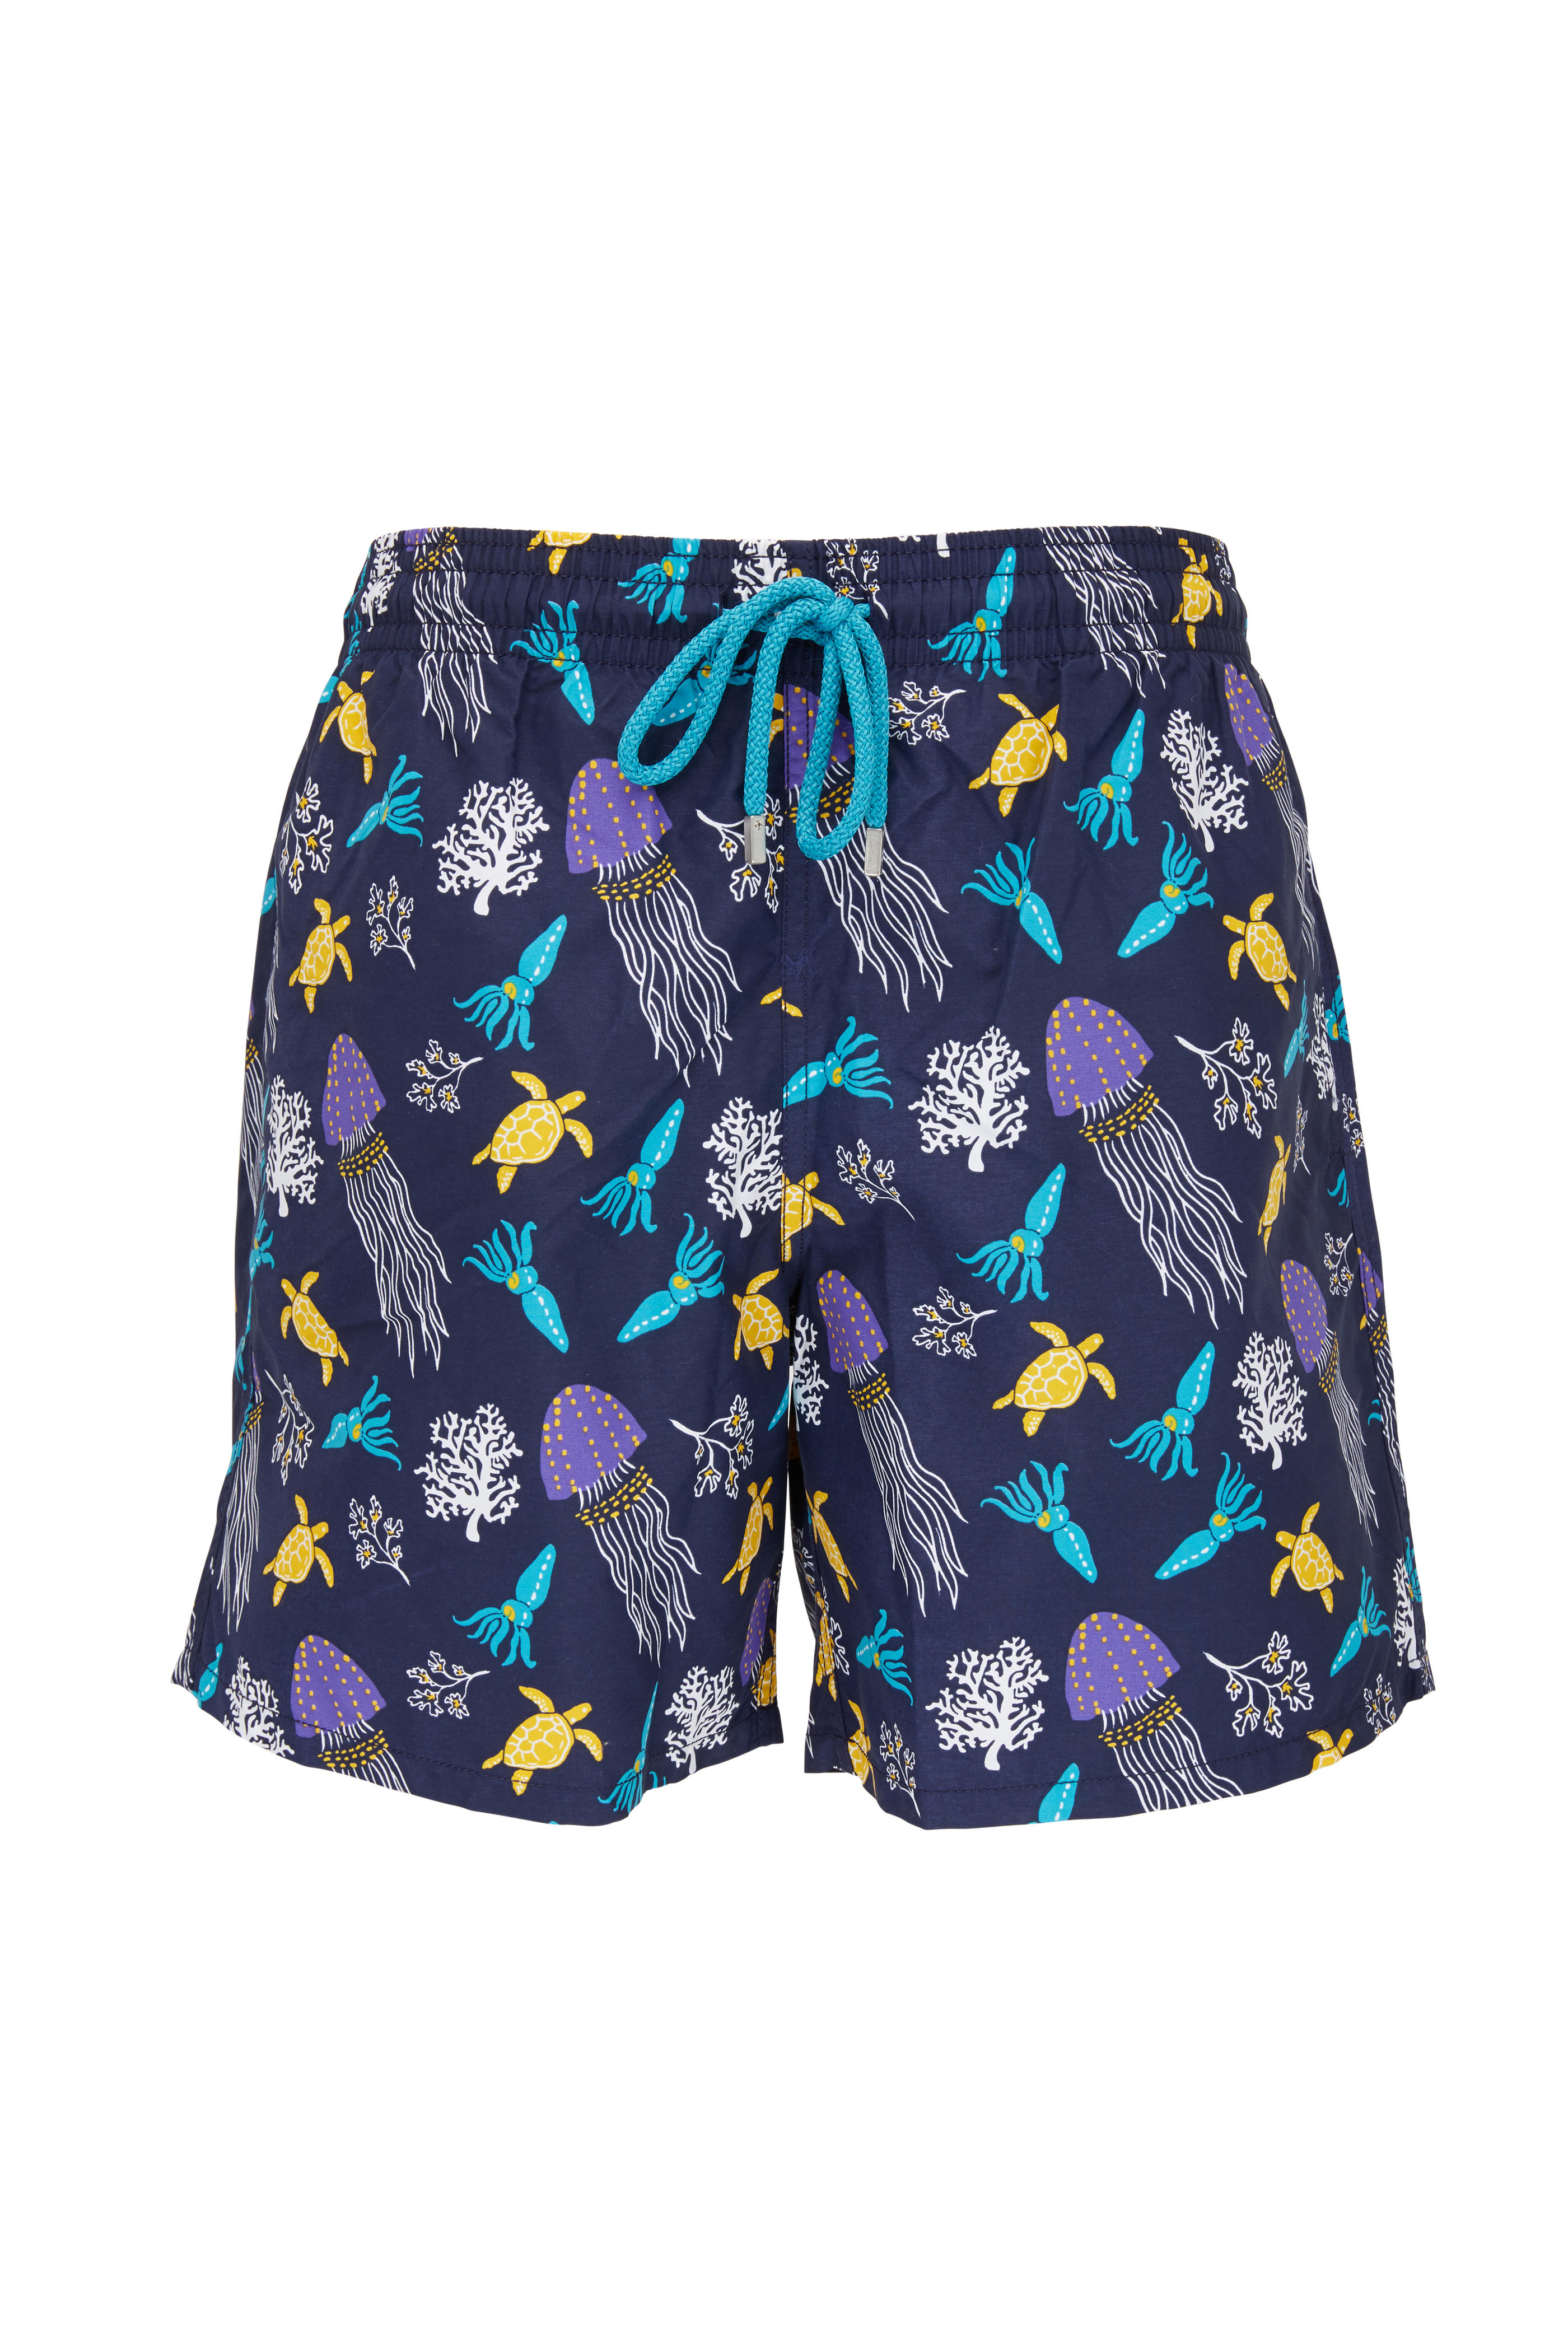 medusa swim shorts